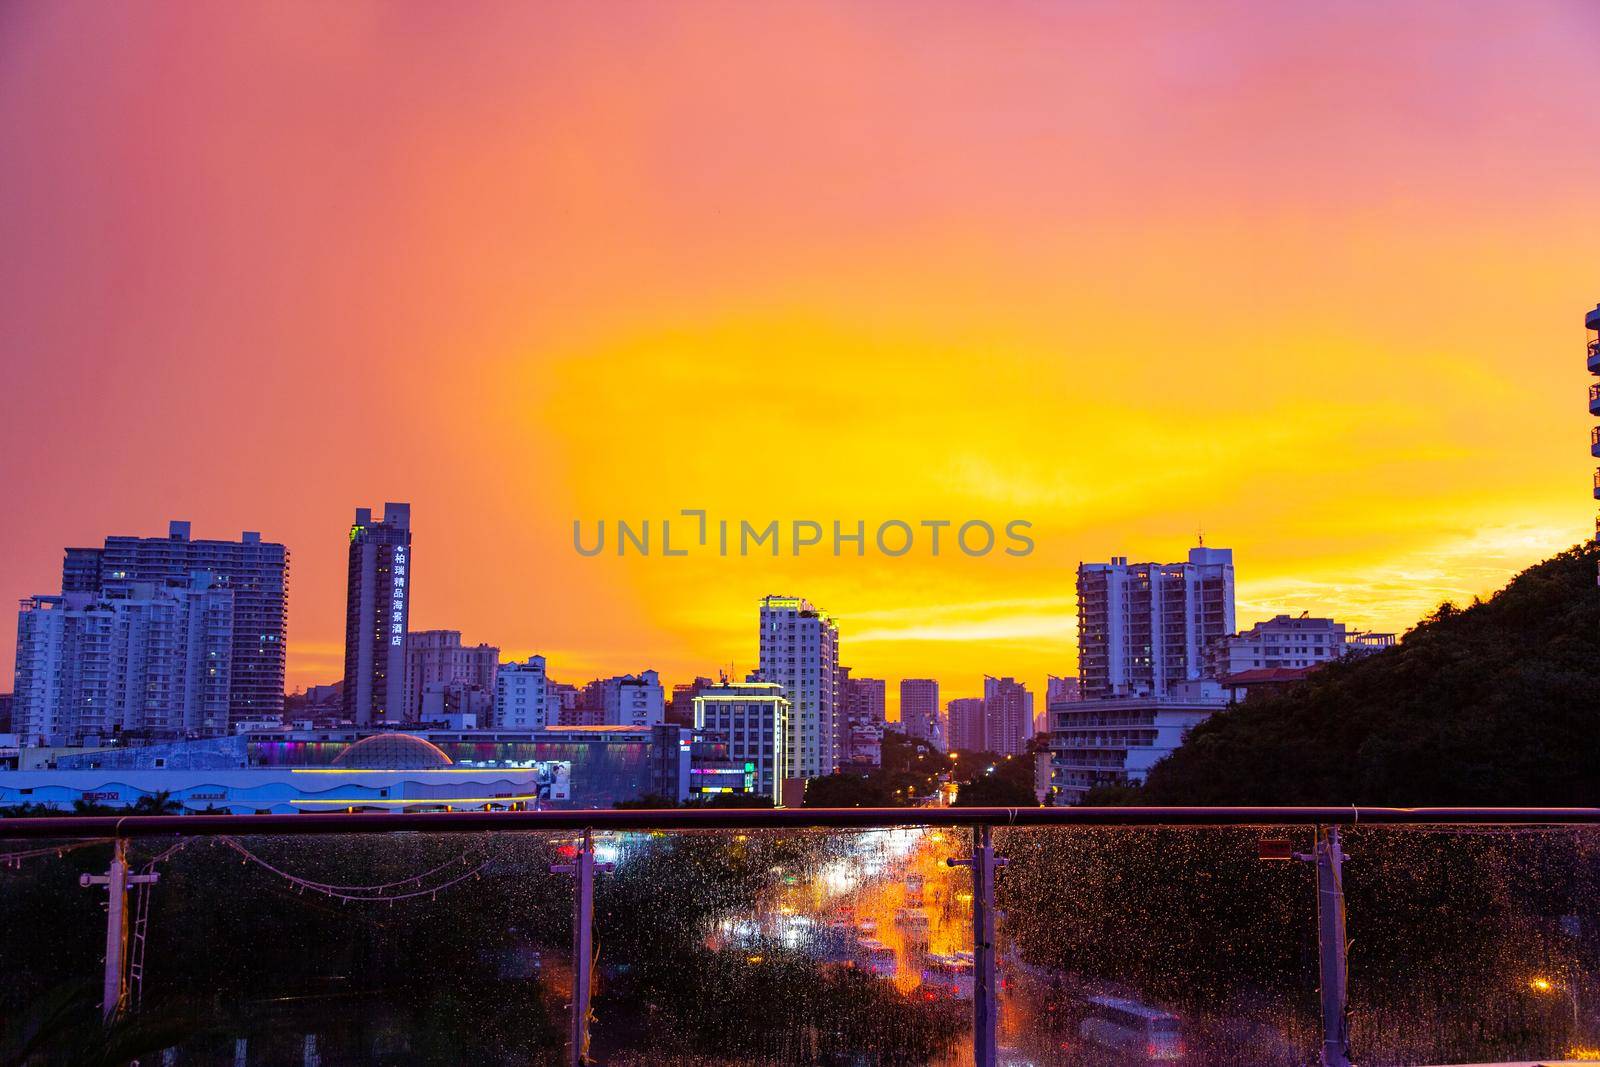 Hainan Sanya City with rain and bright orange sky by kisika